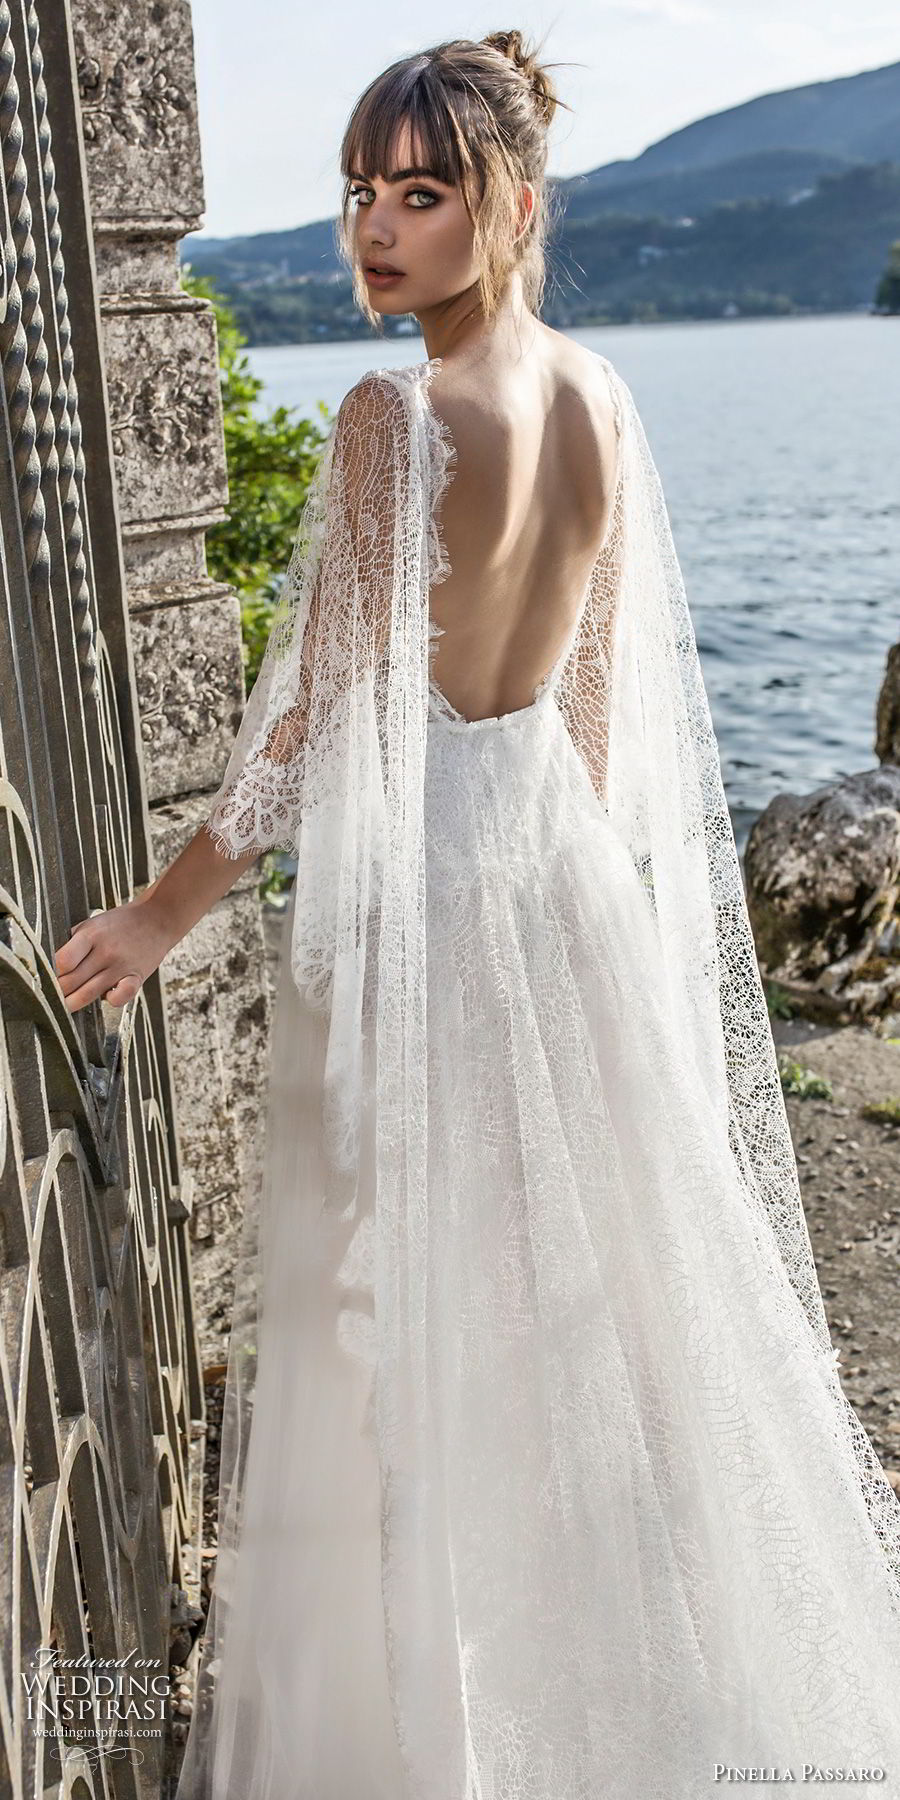 pinella passaro 2018 bridal half cornet sleeves v neck heavily embellished bodice tulle skirt elegant romantic soft a  line wedding dress open back (8) zbv